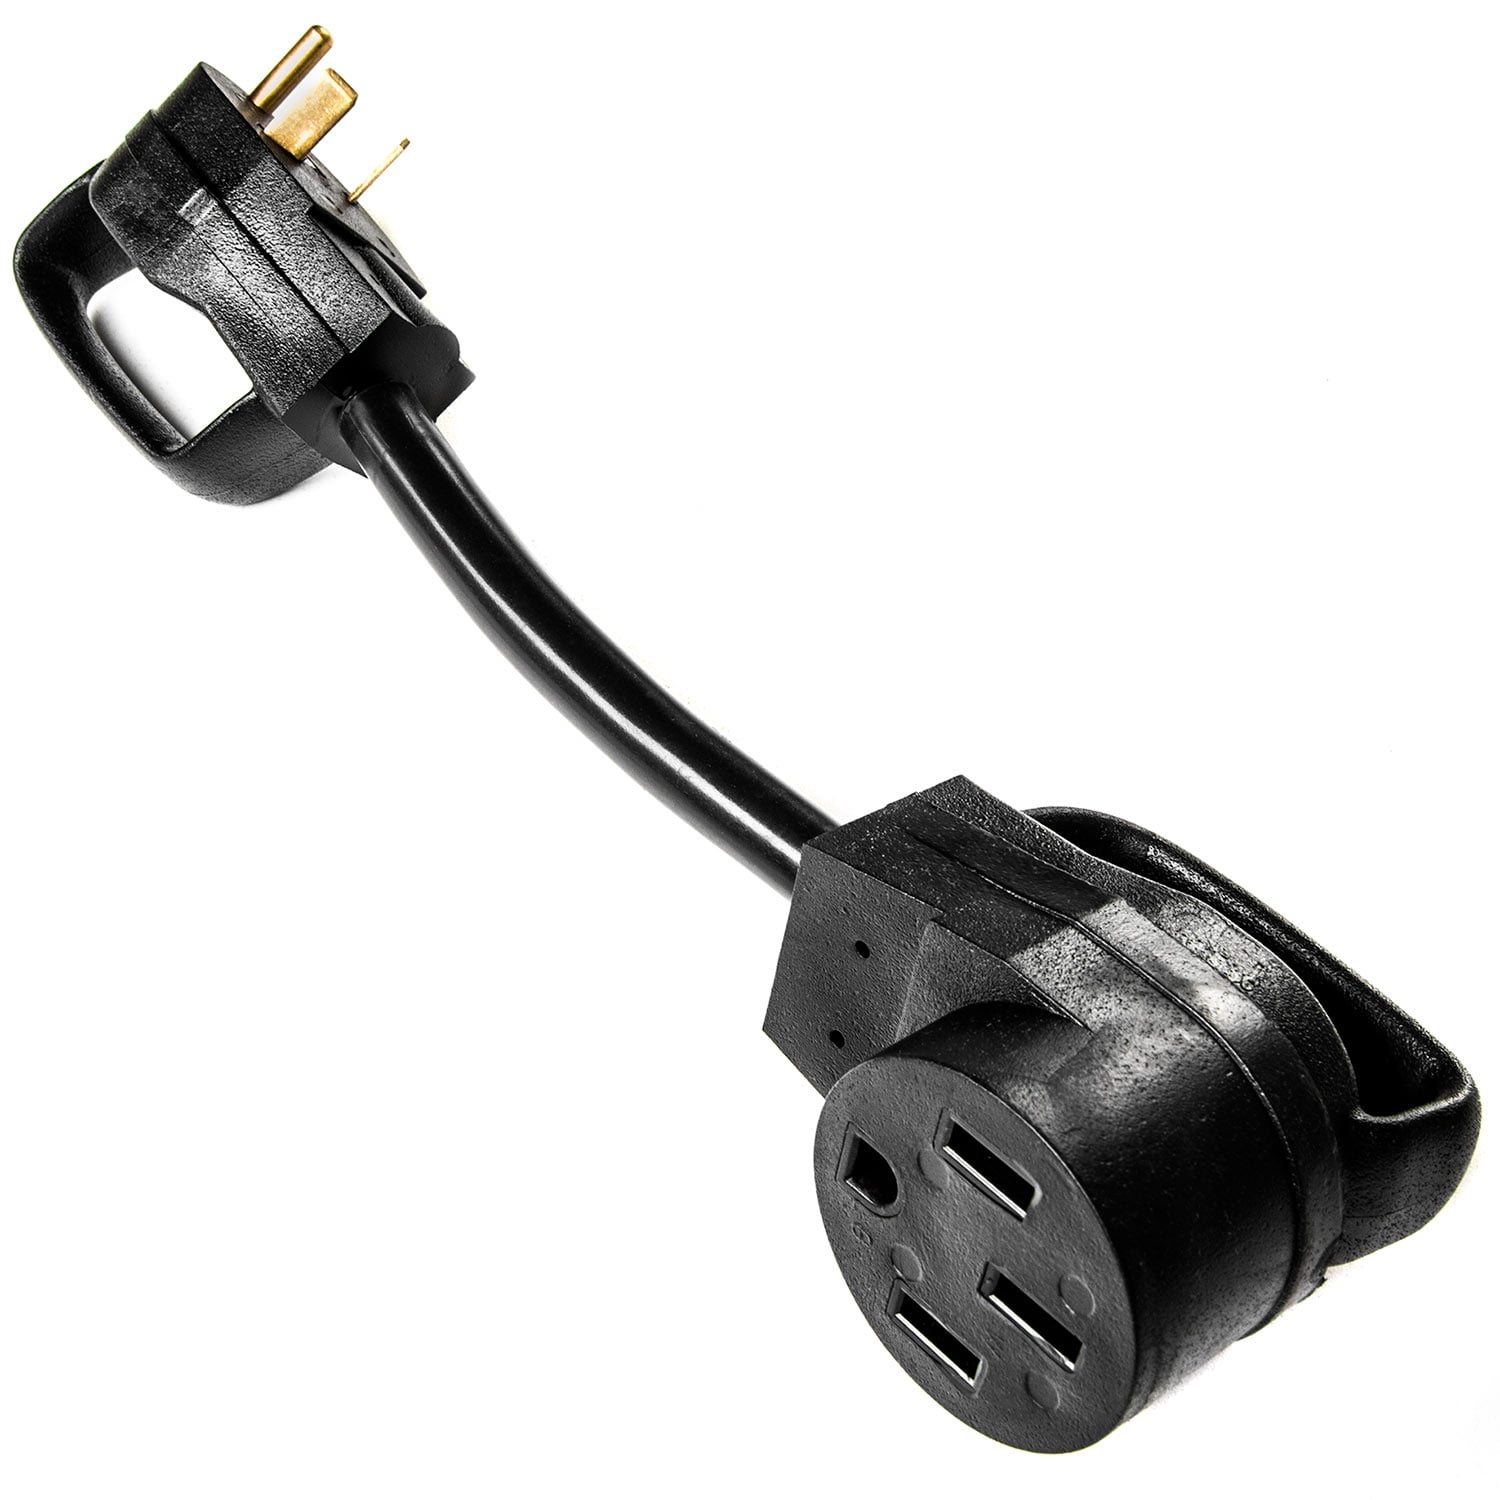 30 amp extension cord adaptrer